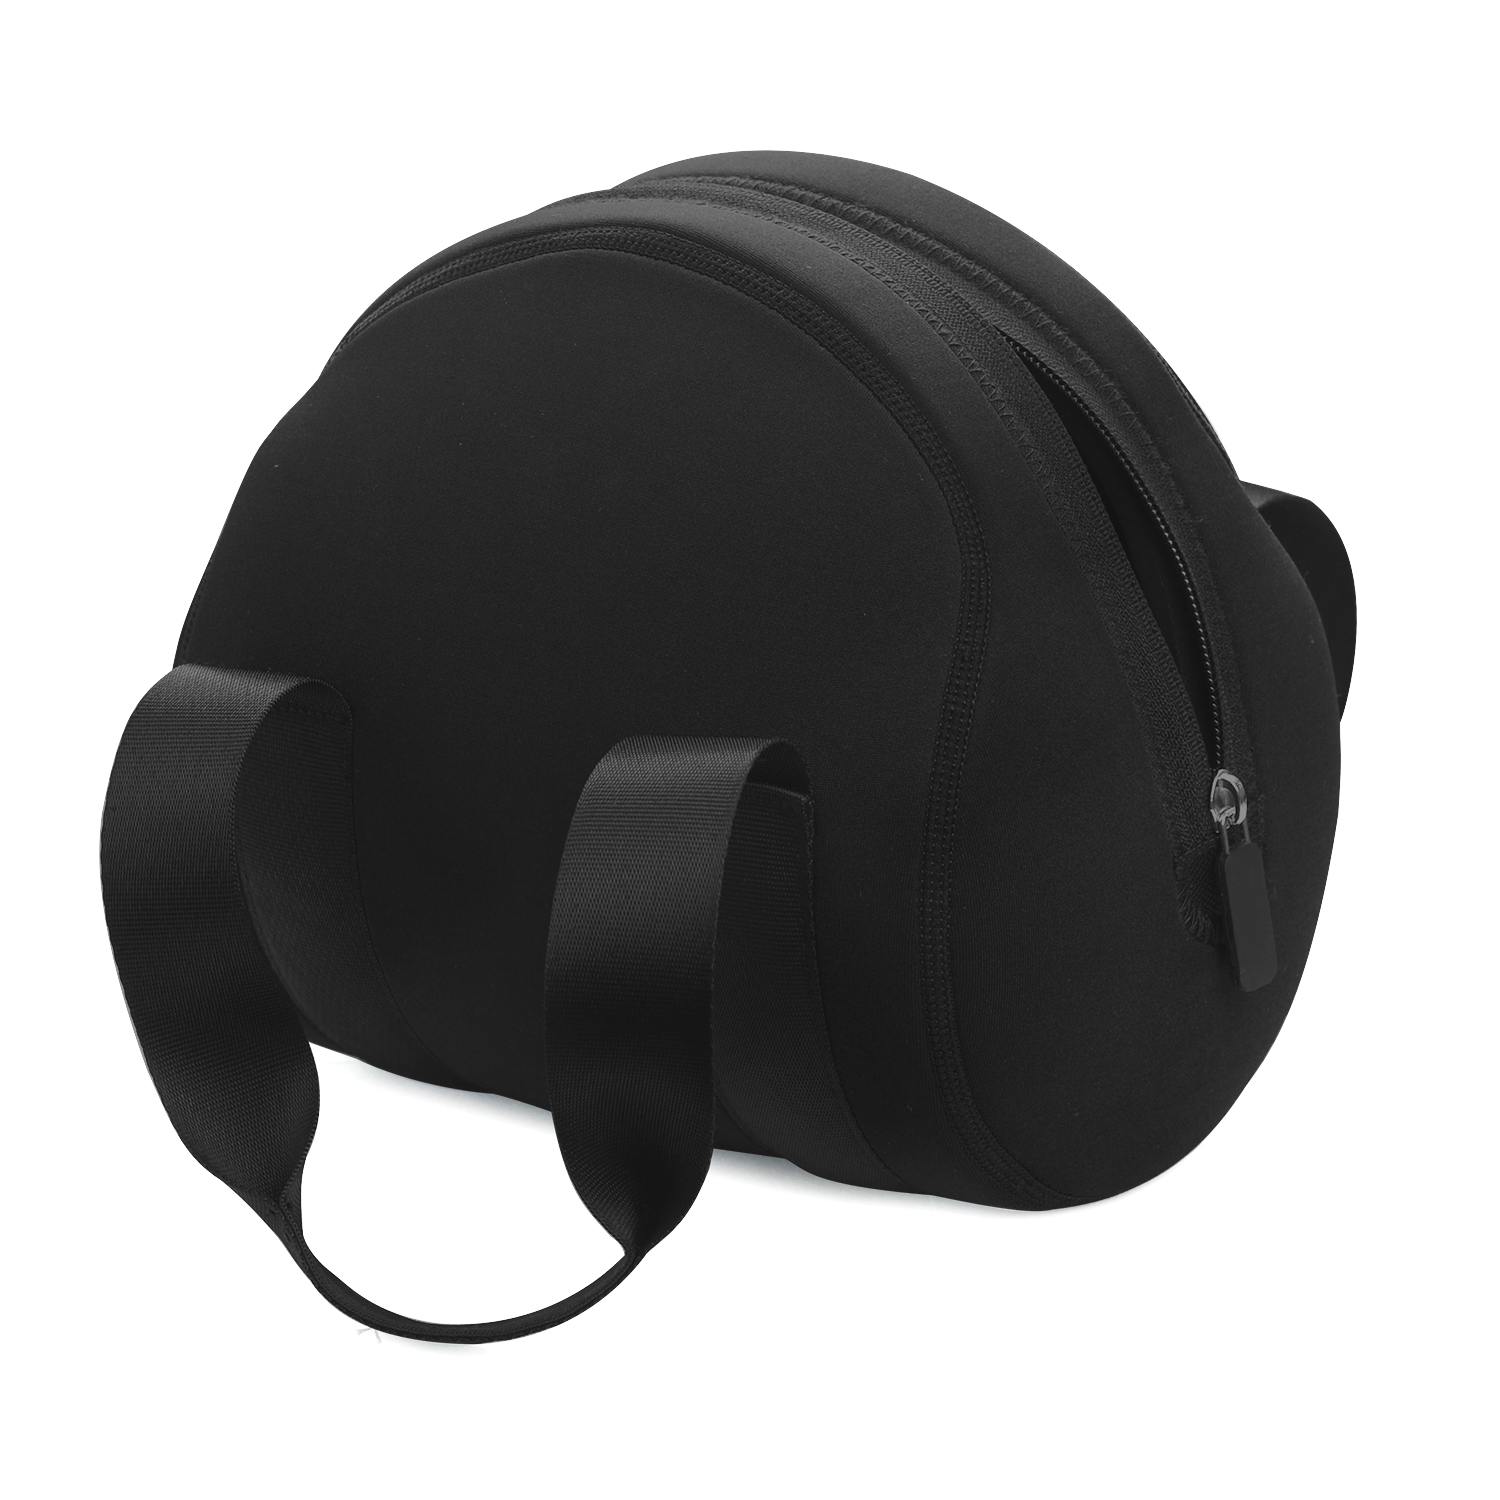 Bakeey-Speaker-Storage-Bag-Protective-Cover-Handbag-Portable-Outdoor-Travel-Spots-Soft-Carrying-Bag--1830329-5